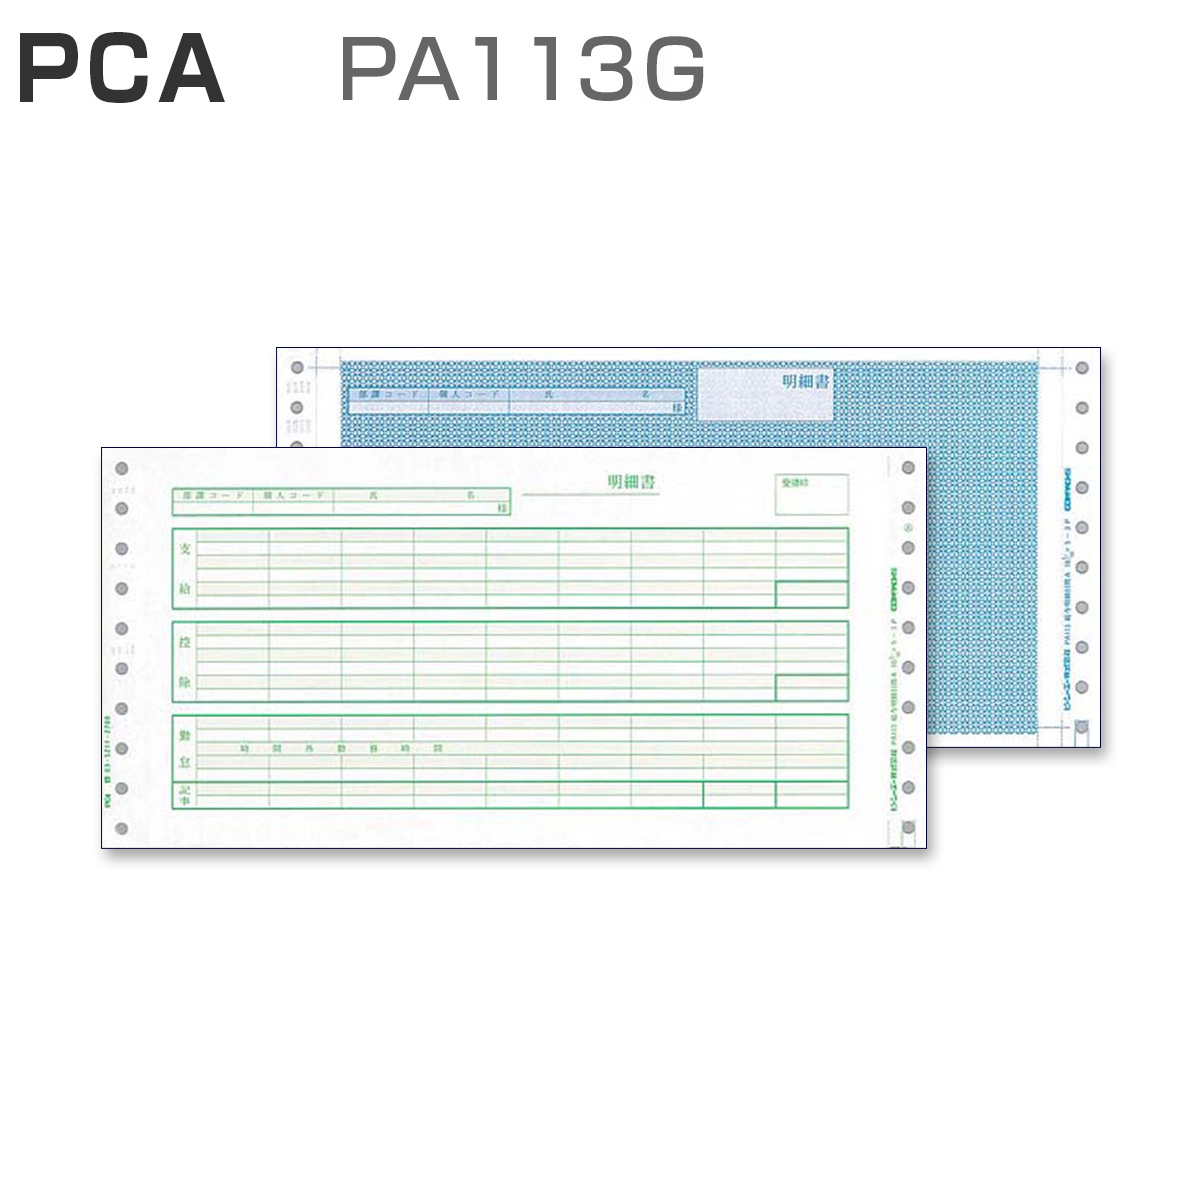 PCA PA113G 給与明細封筒Ａ 【密封式】 (250枚)